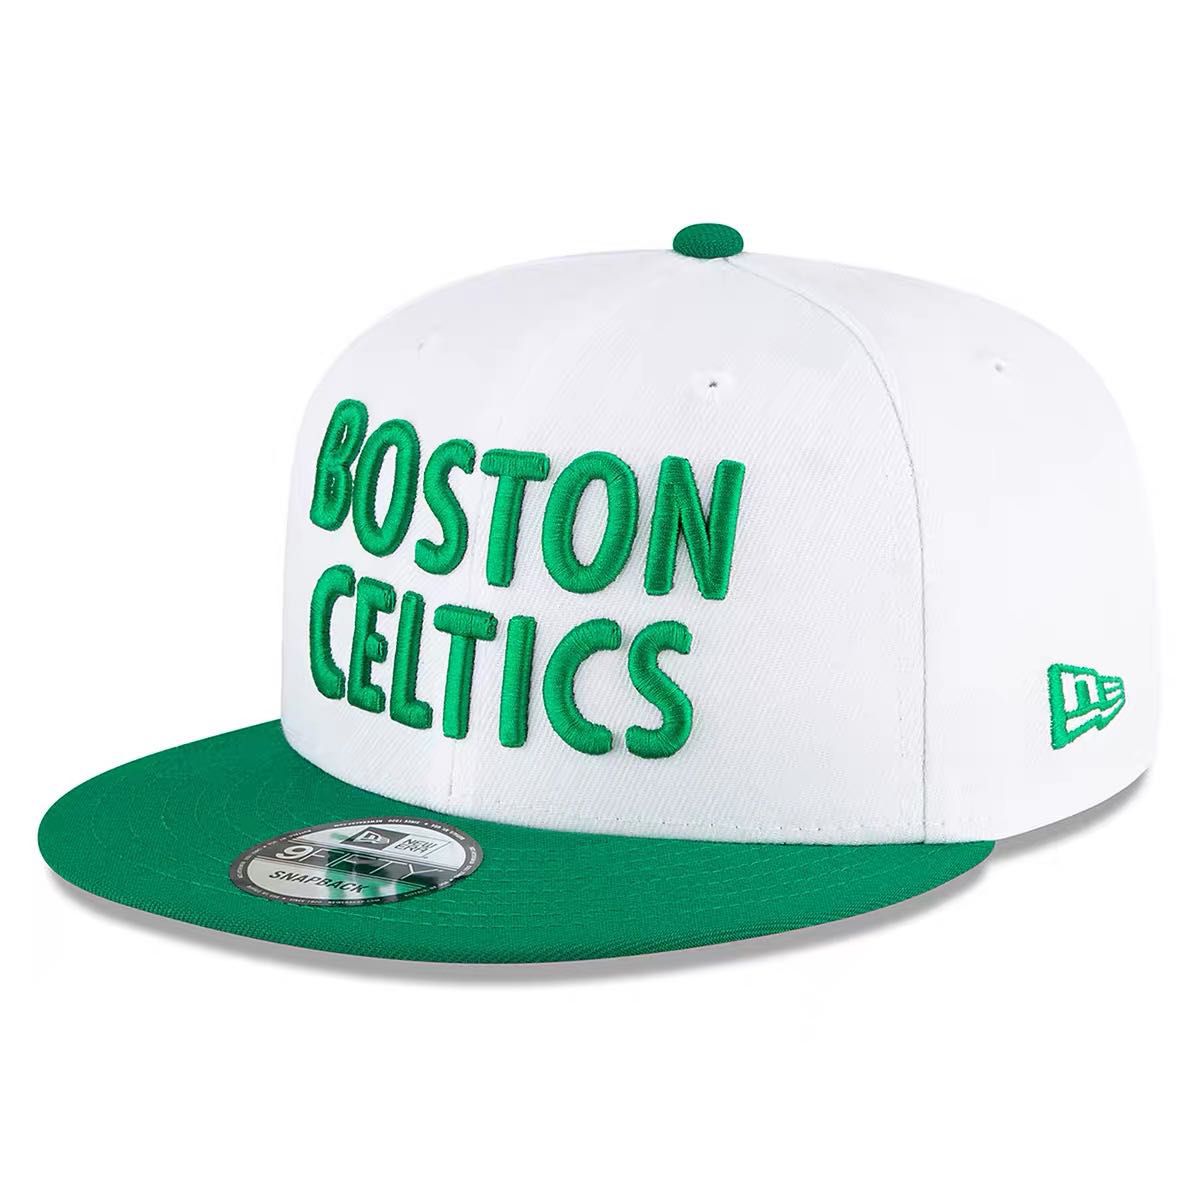 2023 NBA Boston Celtics Hat TX 20233202